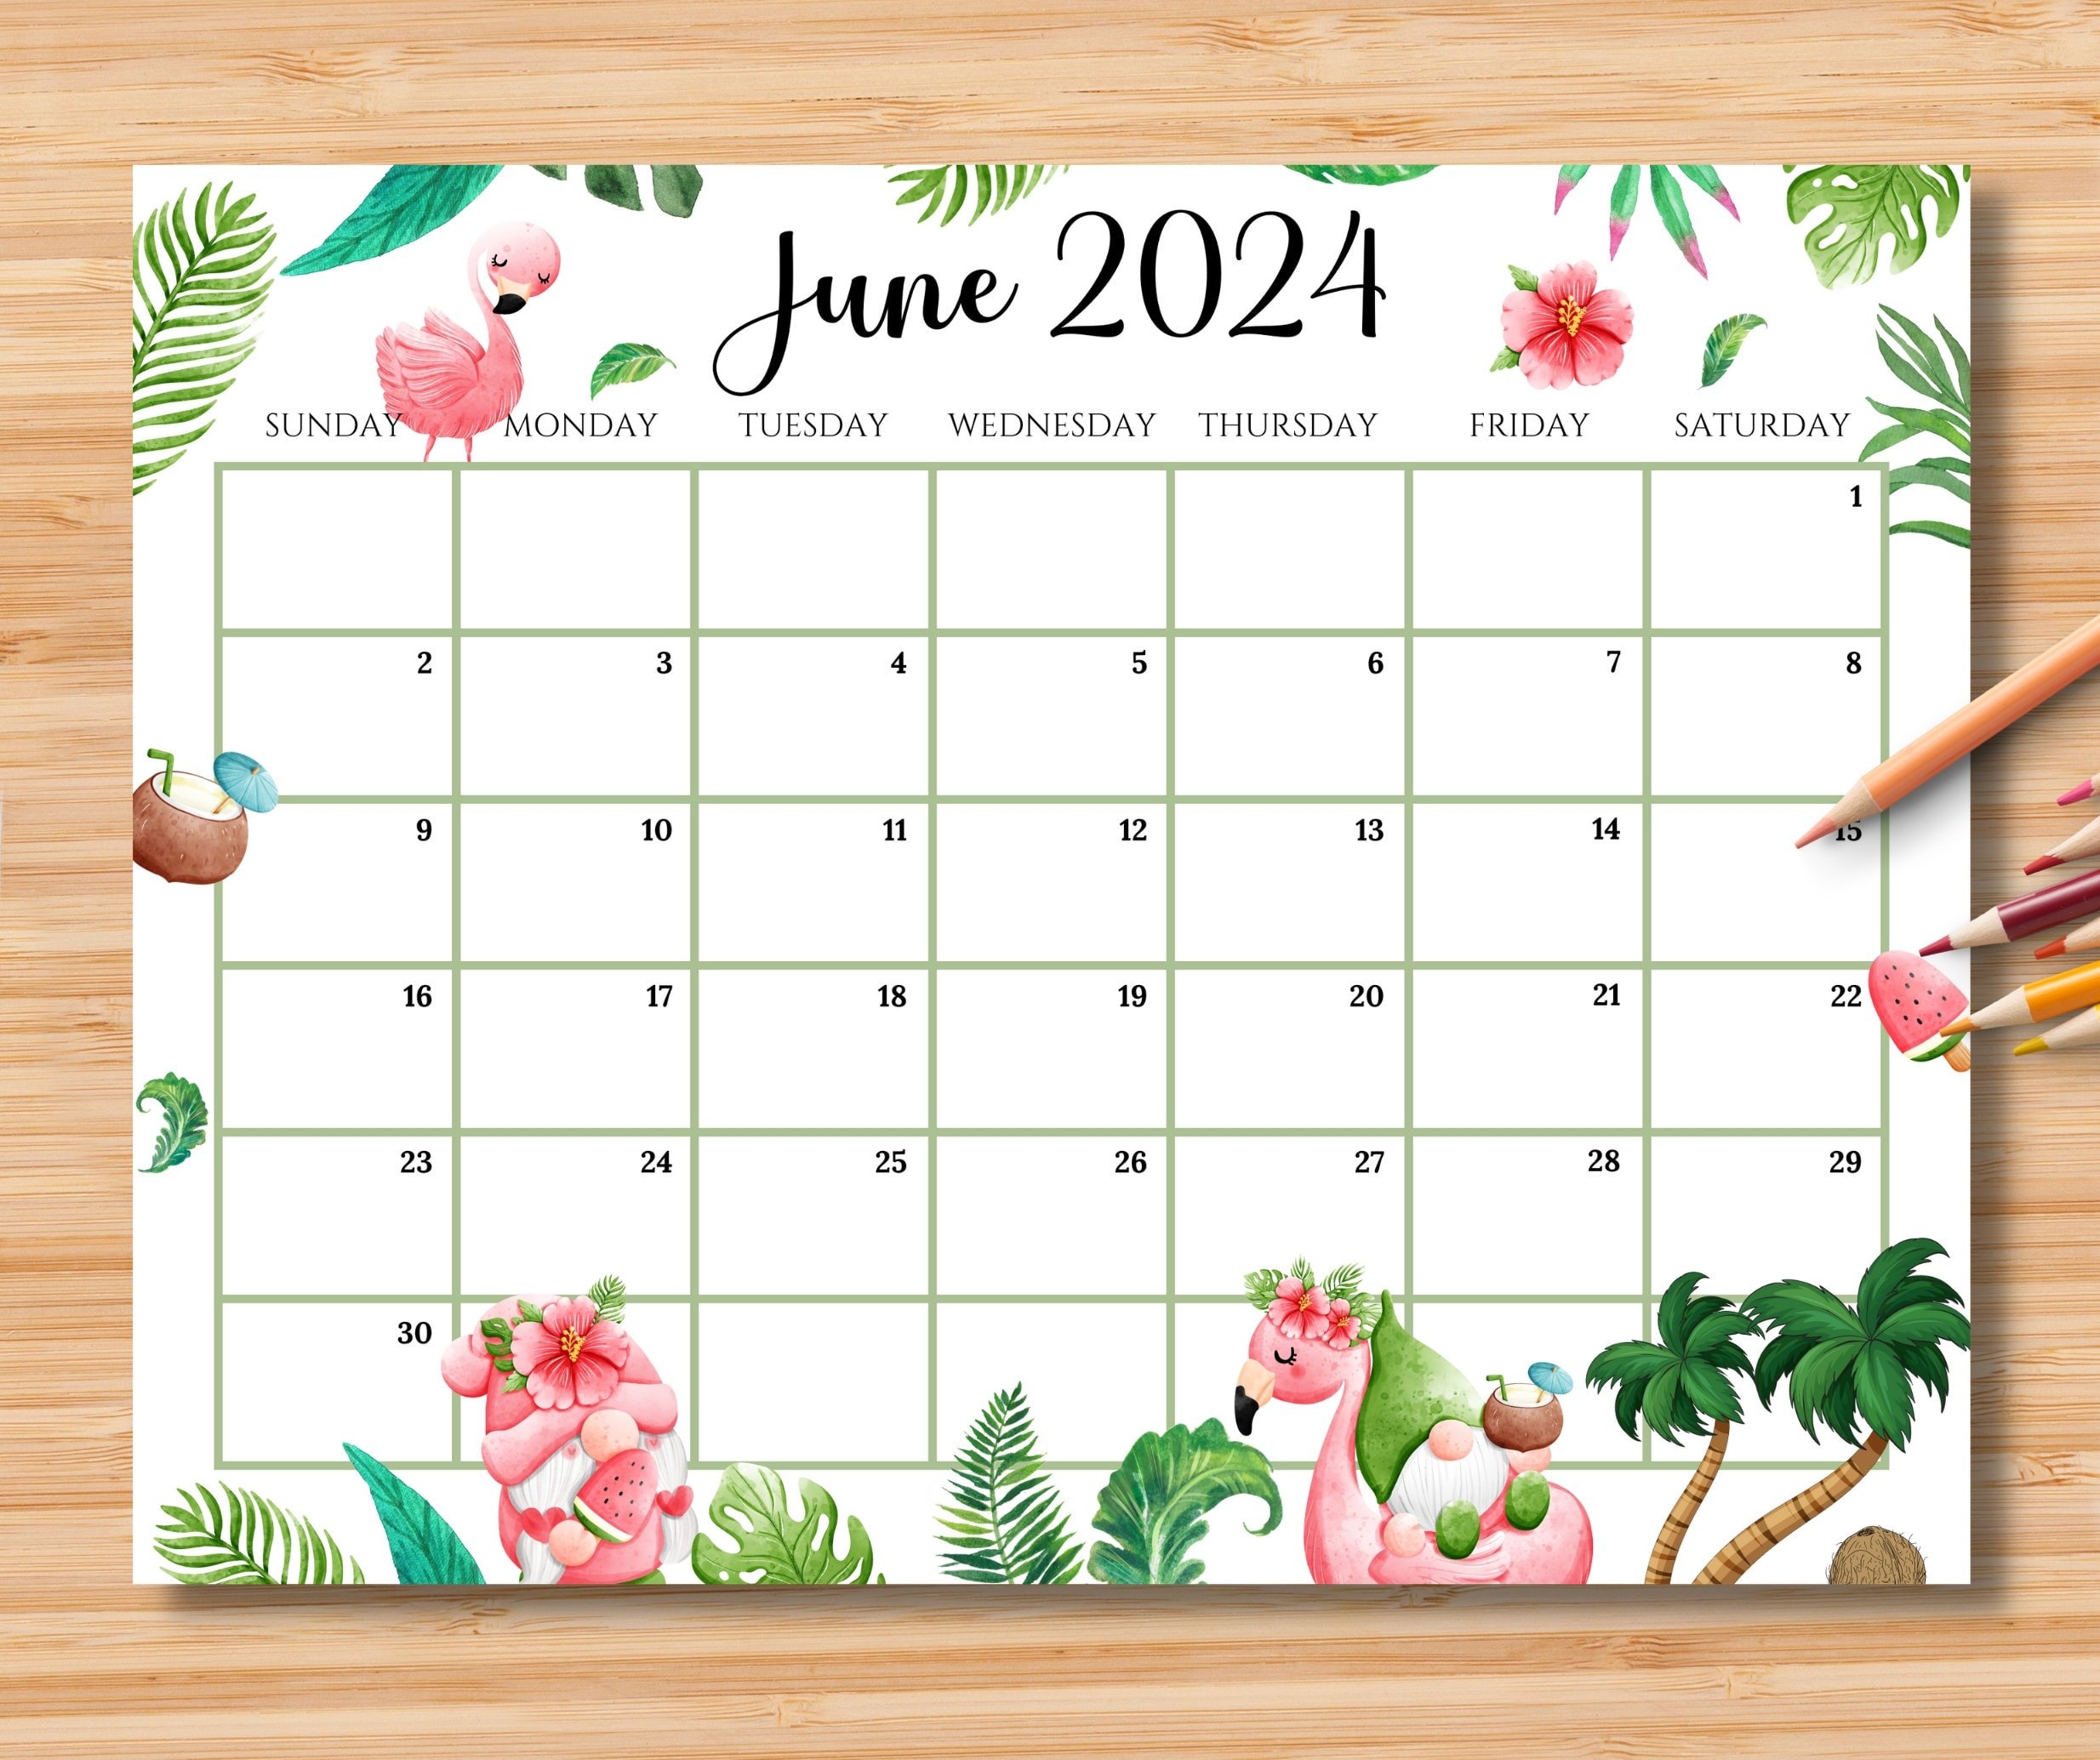 EDITABLE June 2024 Calendar Joyful Summer With Cute Gnomes